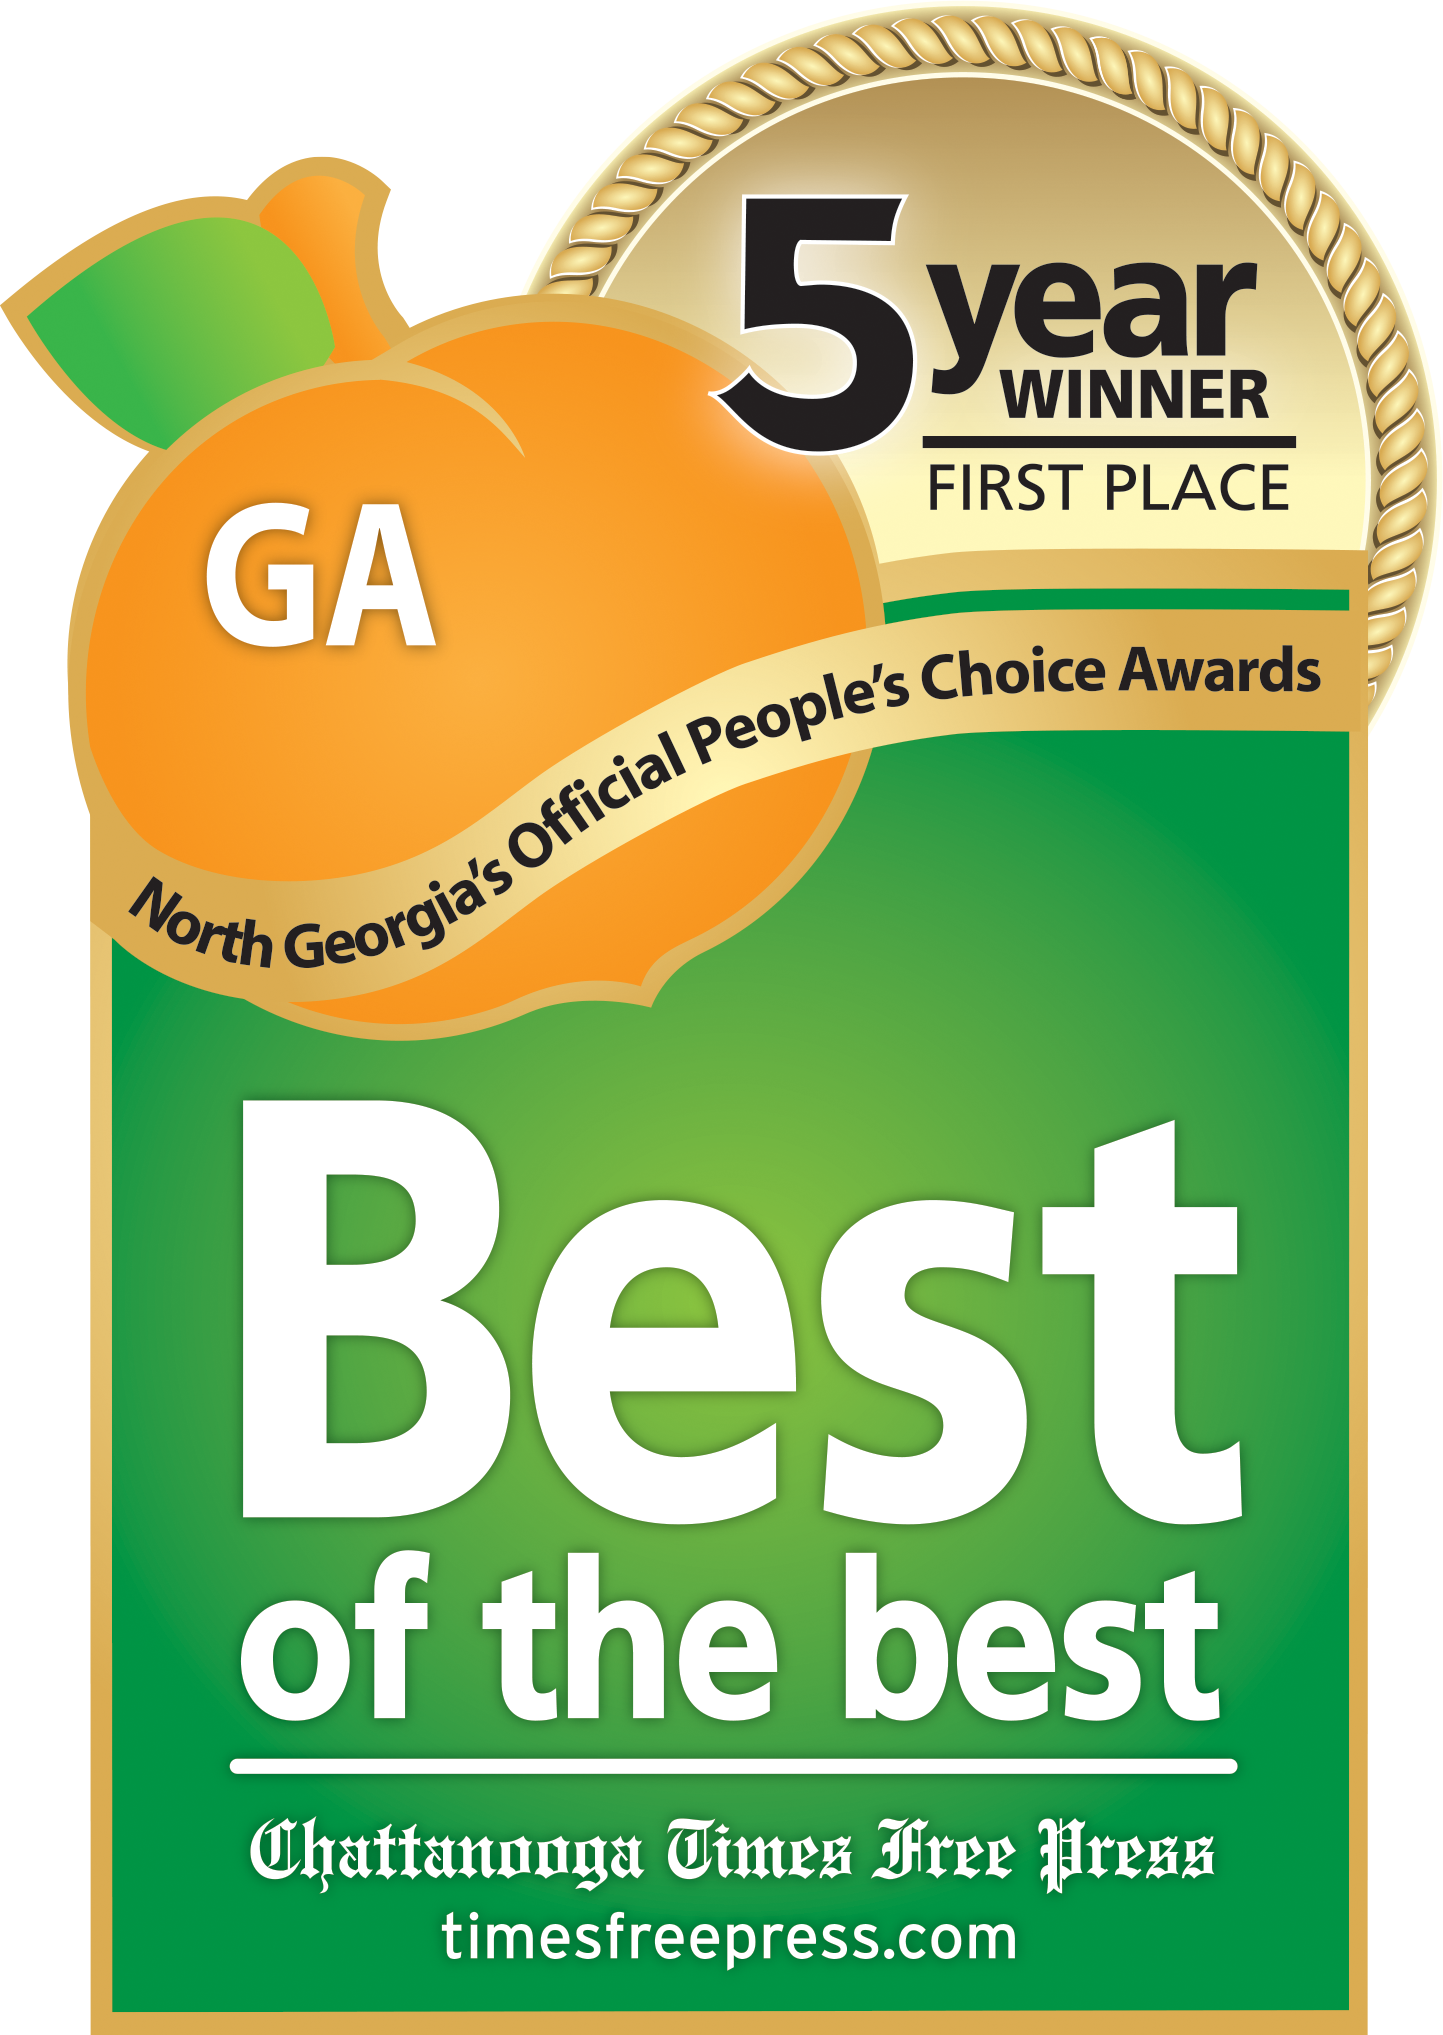 Chattanooga Battlefield Plumbing Best of Best Award